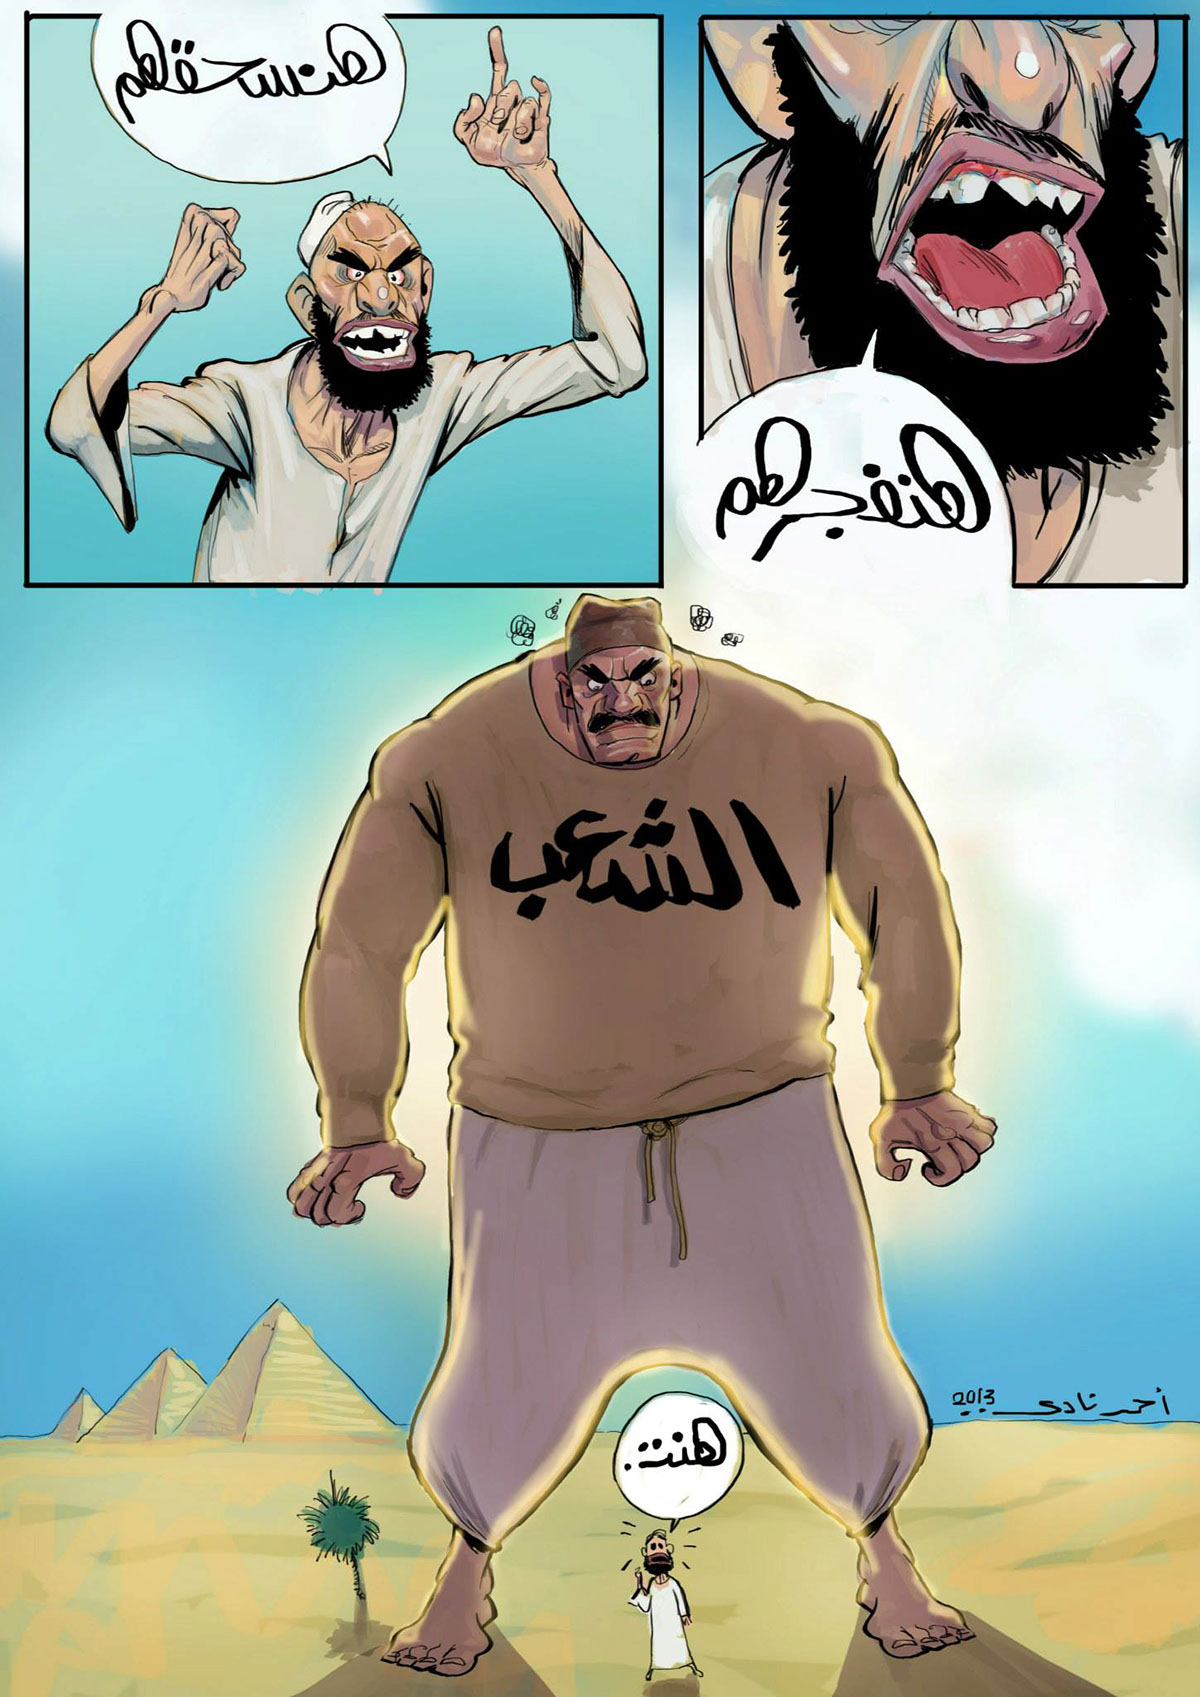 egypt cartoon caricature   revolution